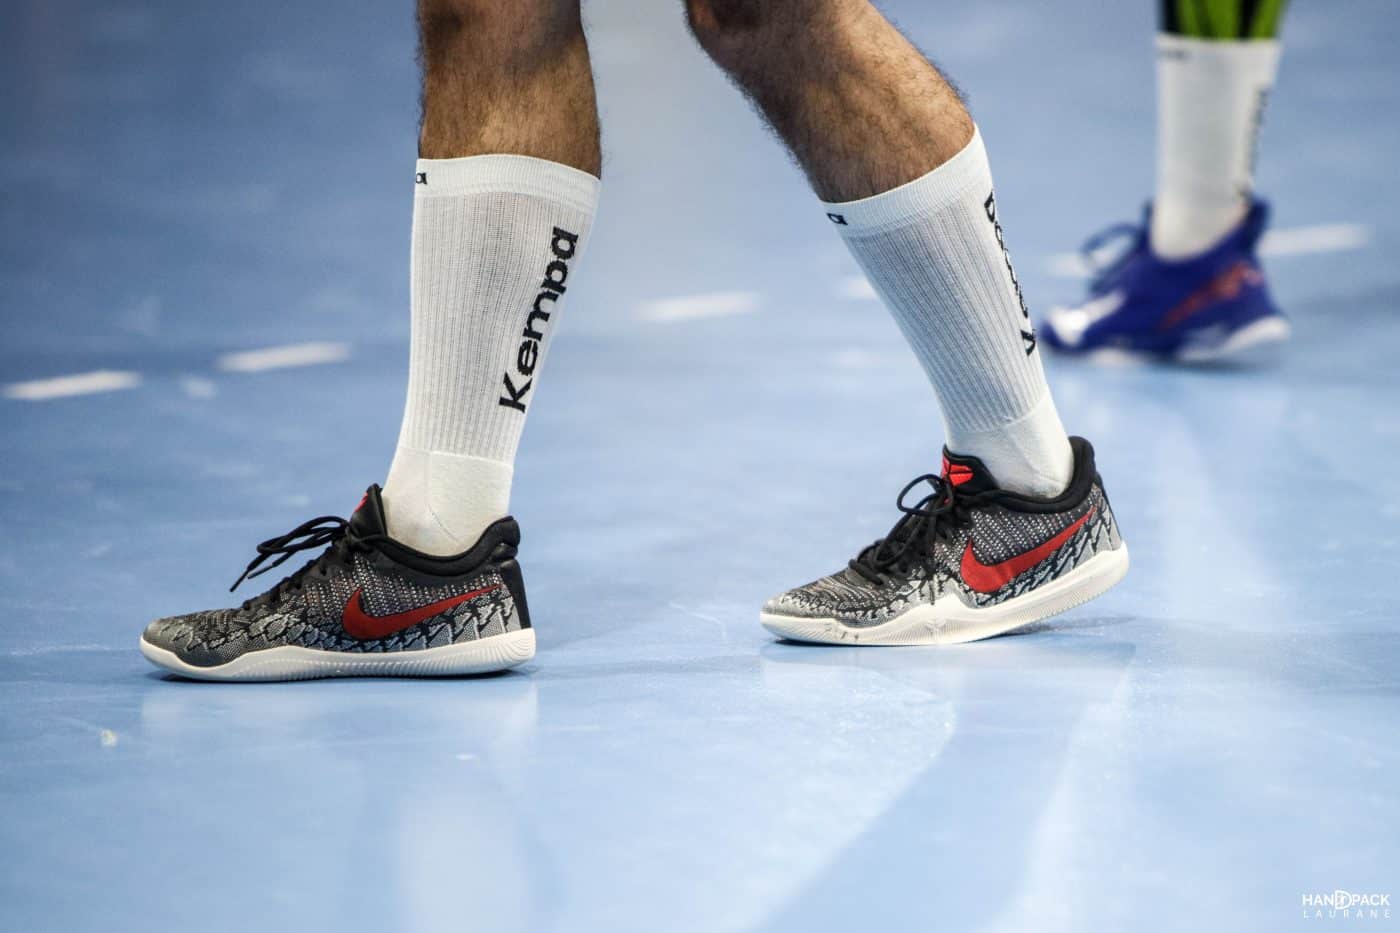 frotis articulo Alpinista Zoom sur les Nike Kobe Mamba Rage de Lucas Ruiz